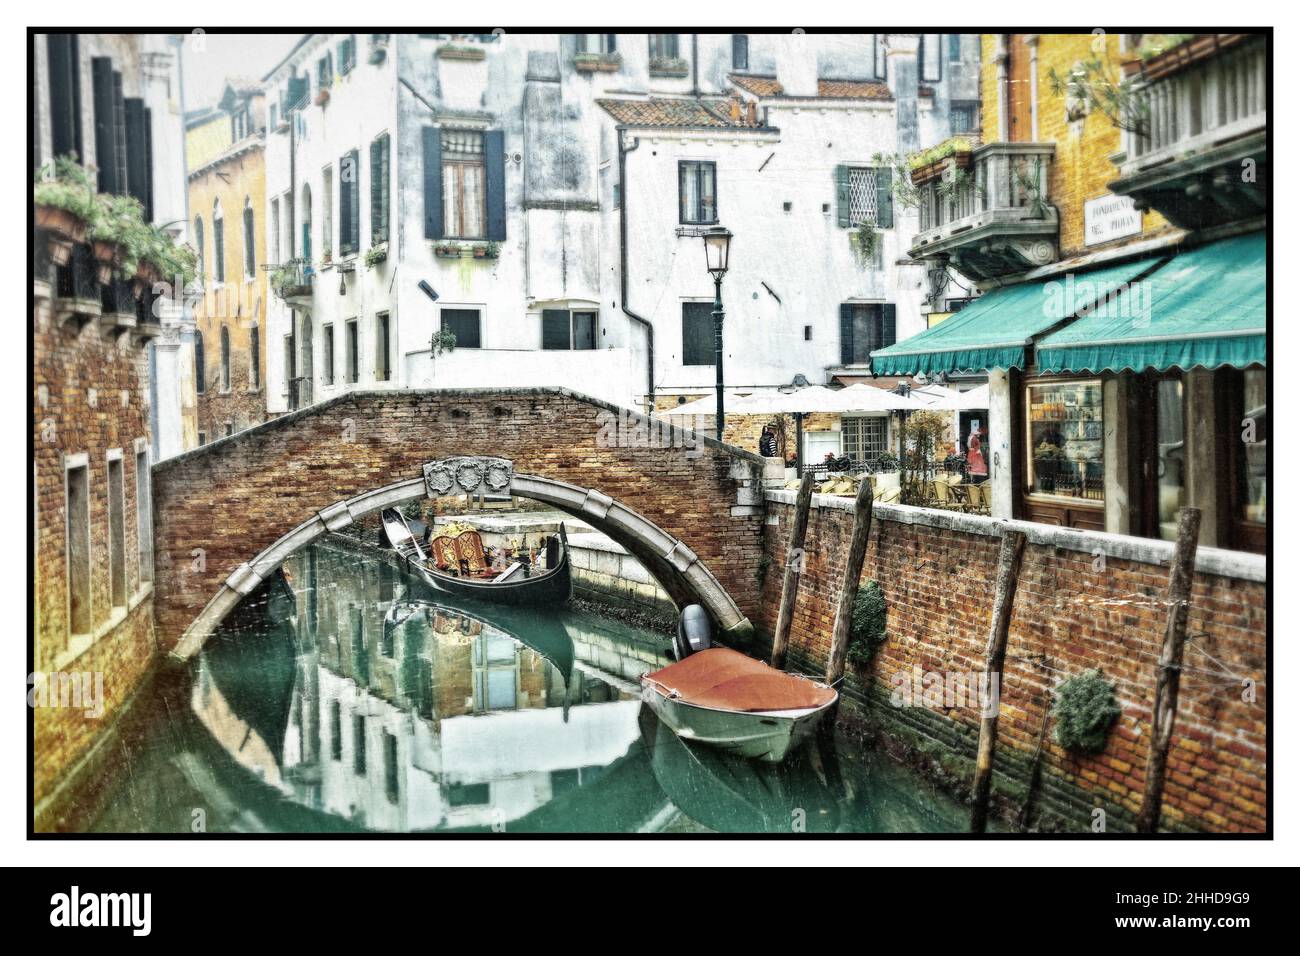 Romantic Venetian canals. Old narrow streets of Venice. Gondolas and bridges. Retro styled picture. Italy Stock Photo